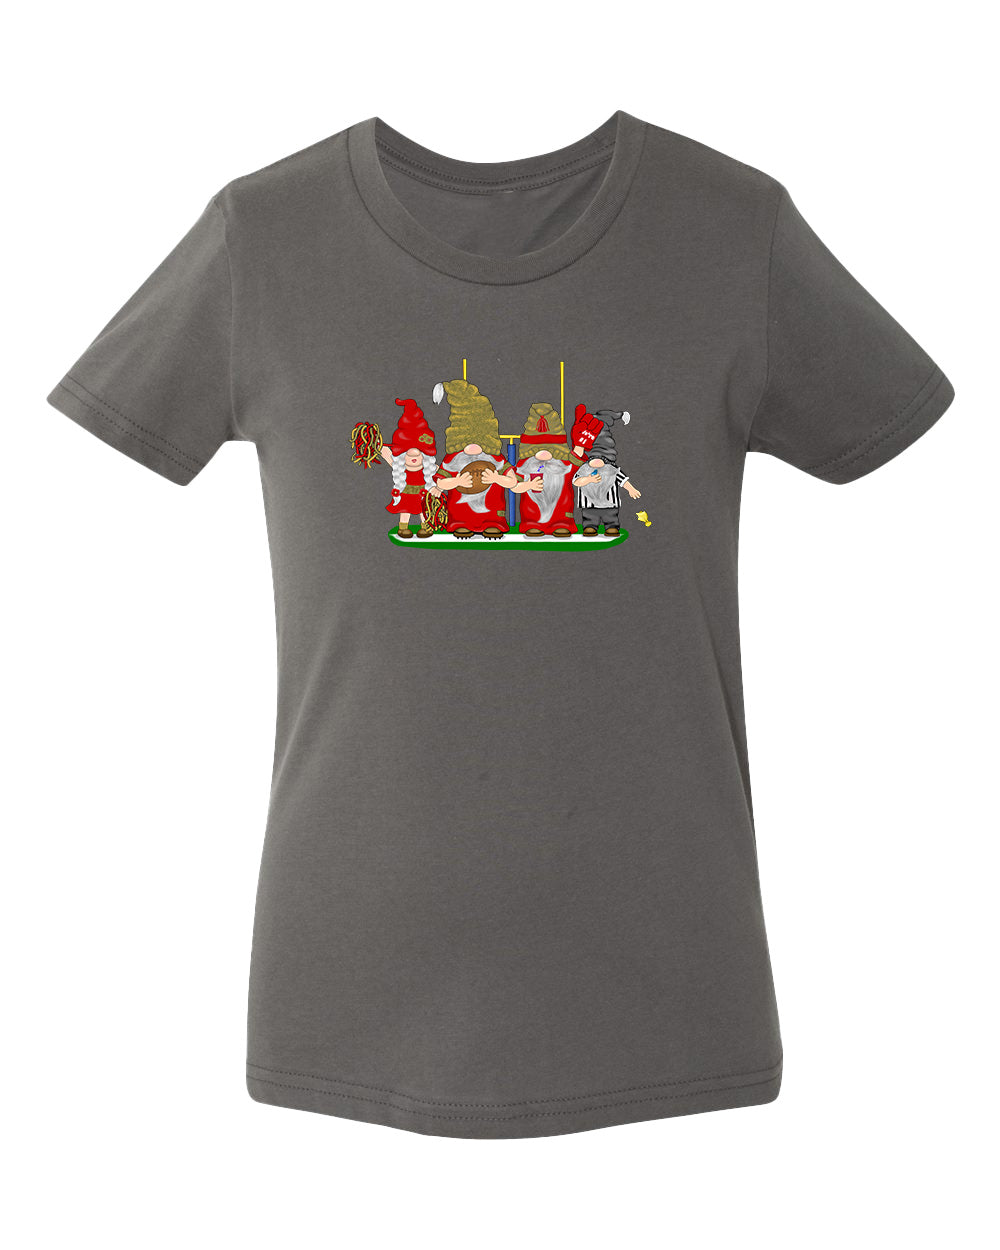 Red & Gold Football Gnomes  (similar to San Fransisco) on Kids T-shirt